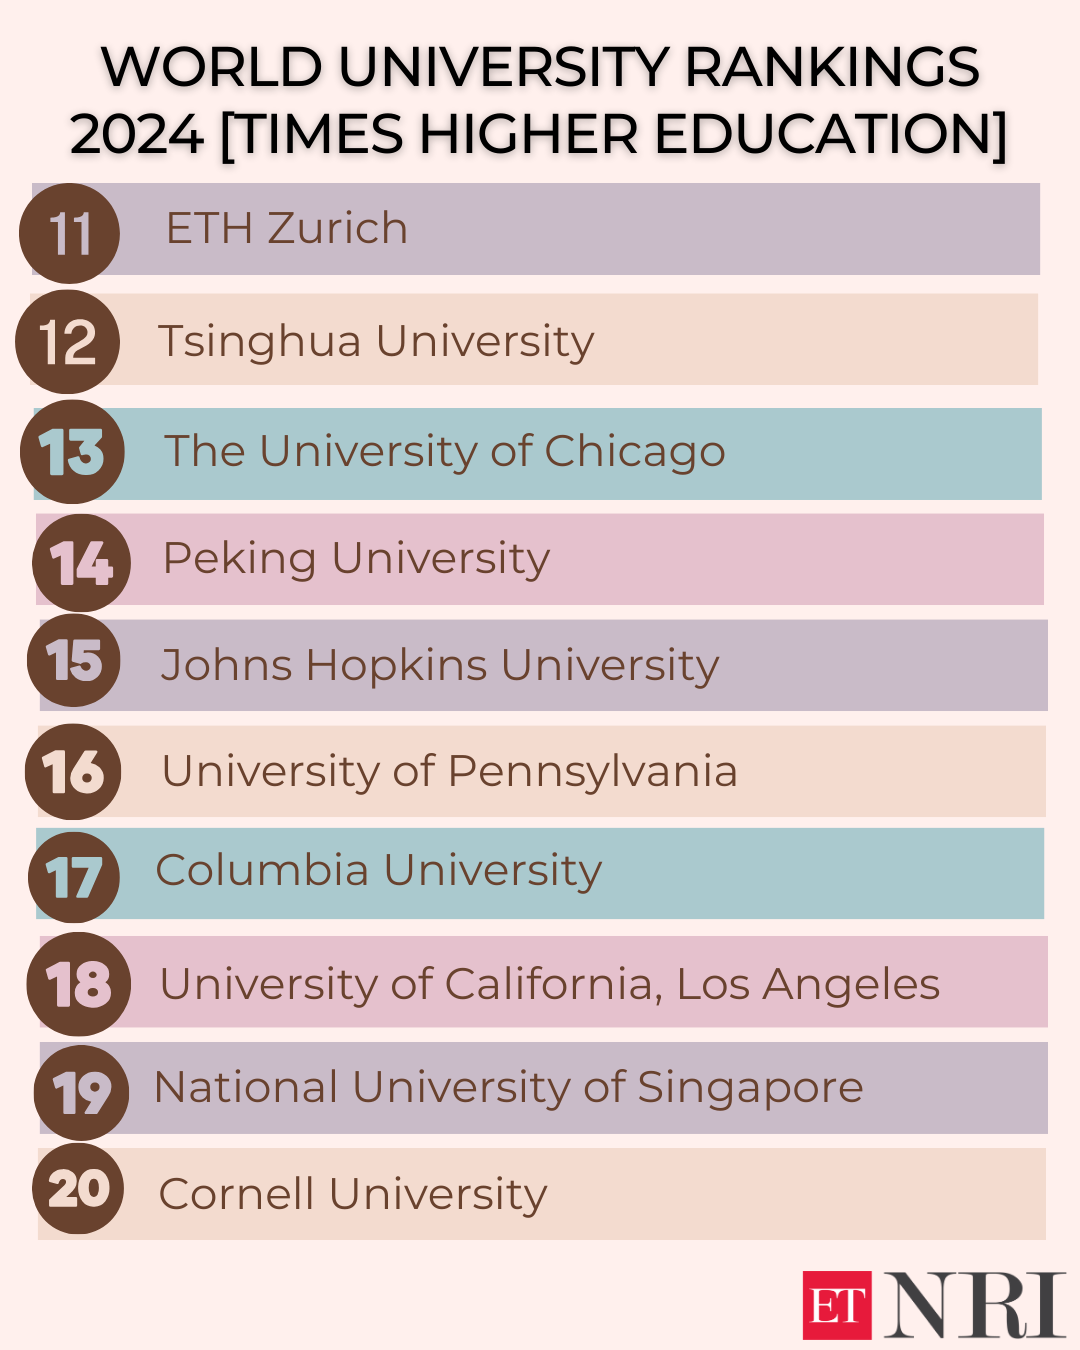 World University Rankings 2024 Times Higher Education unveils World